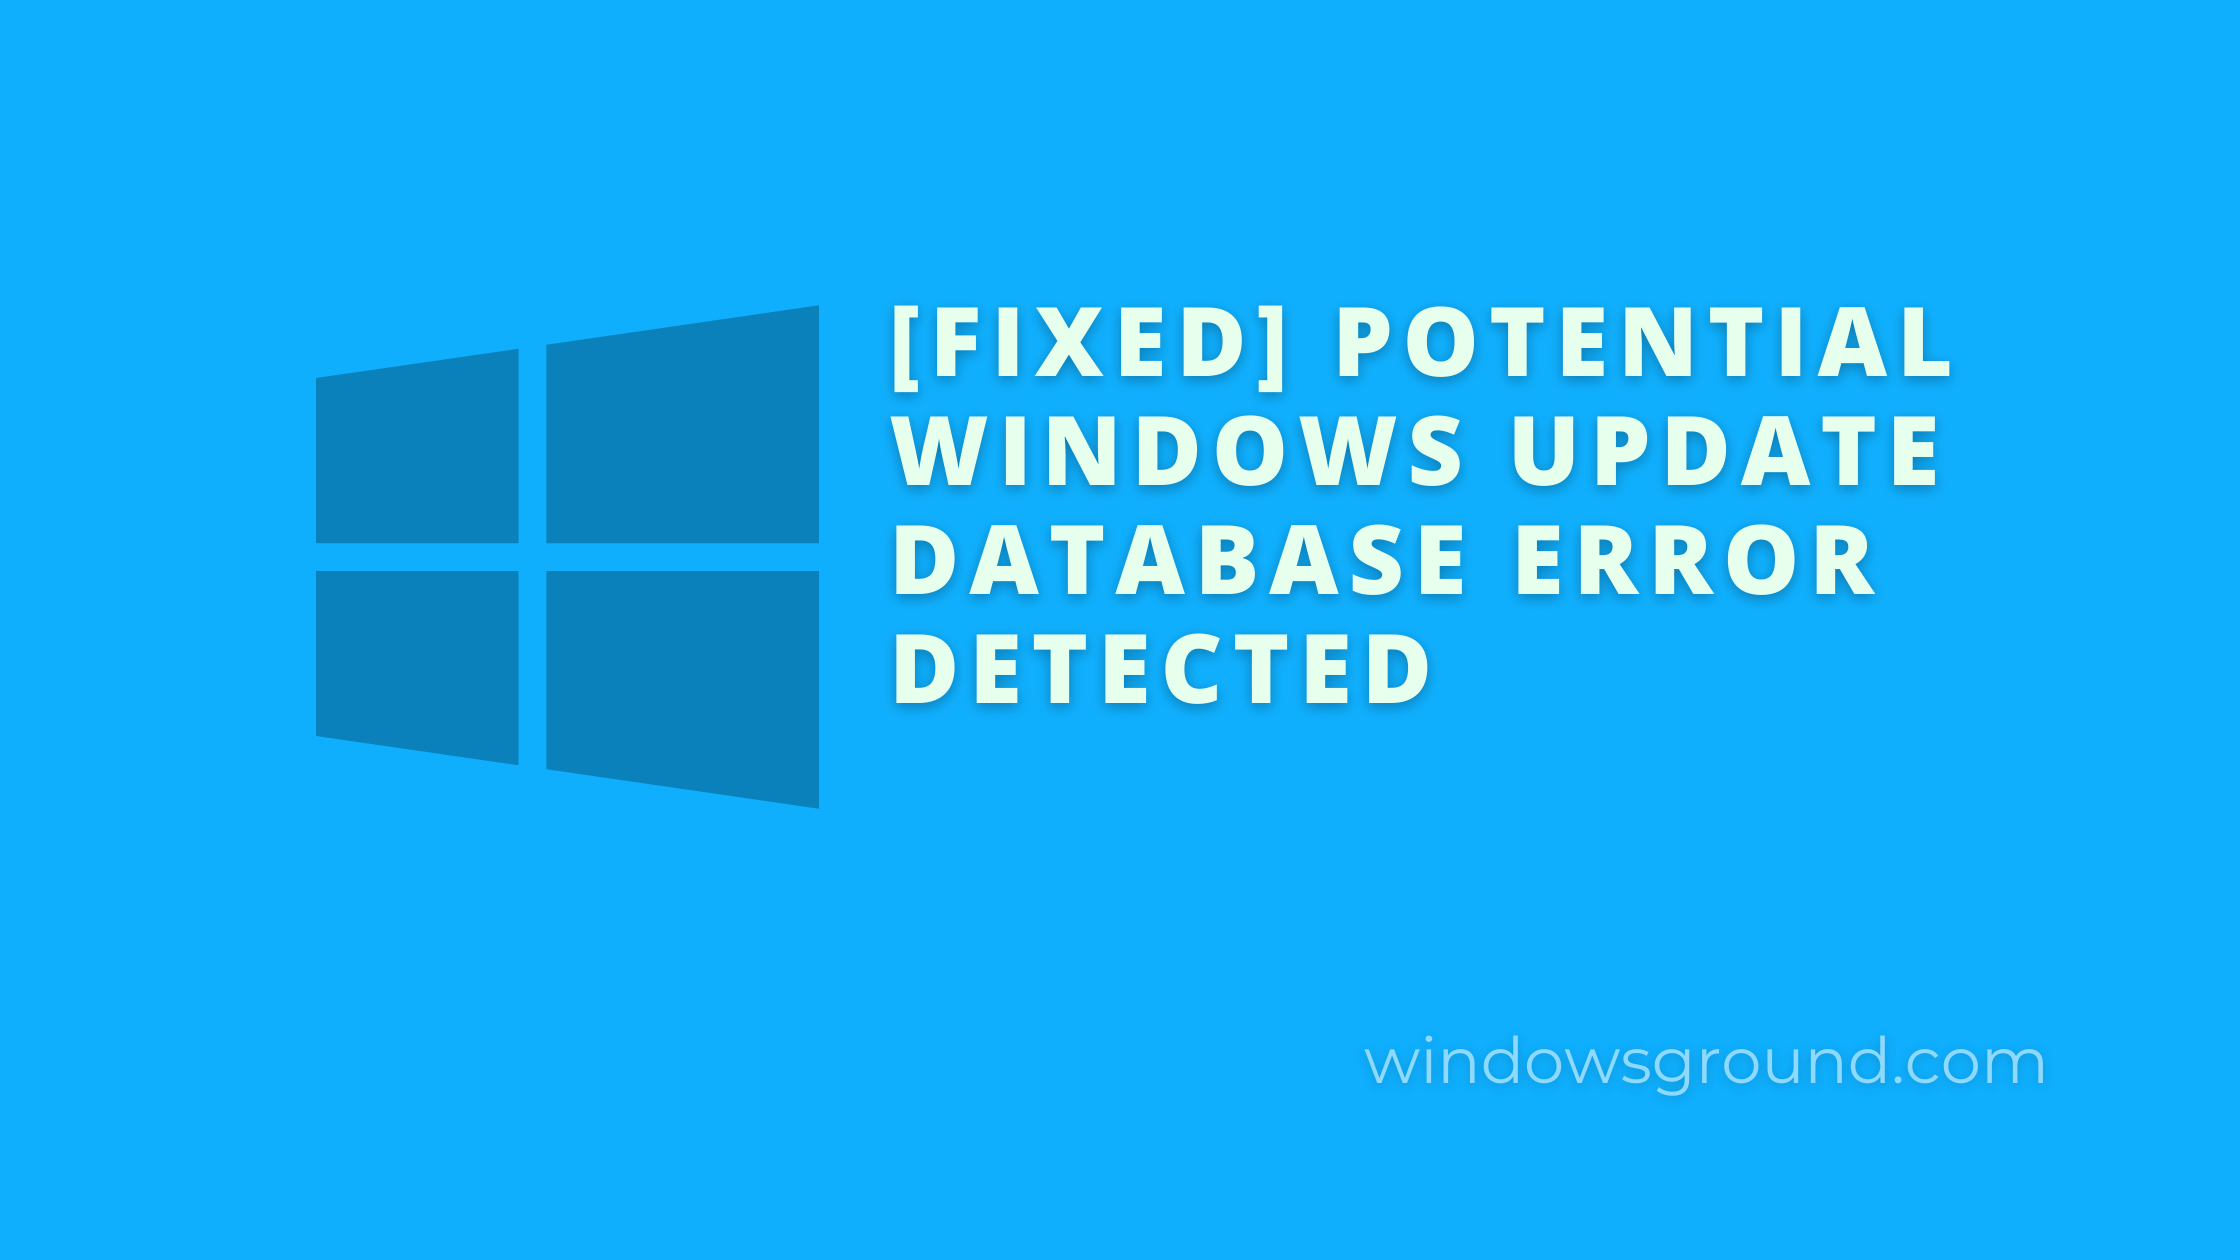 Fixed potential windows update database error detected